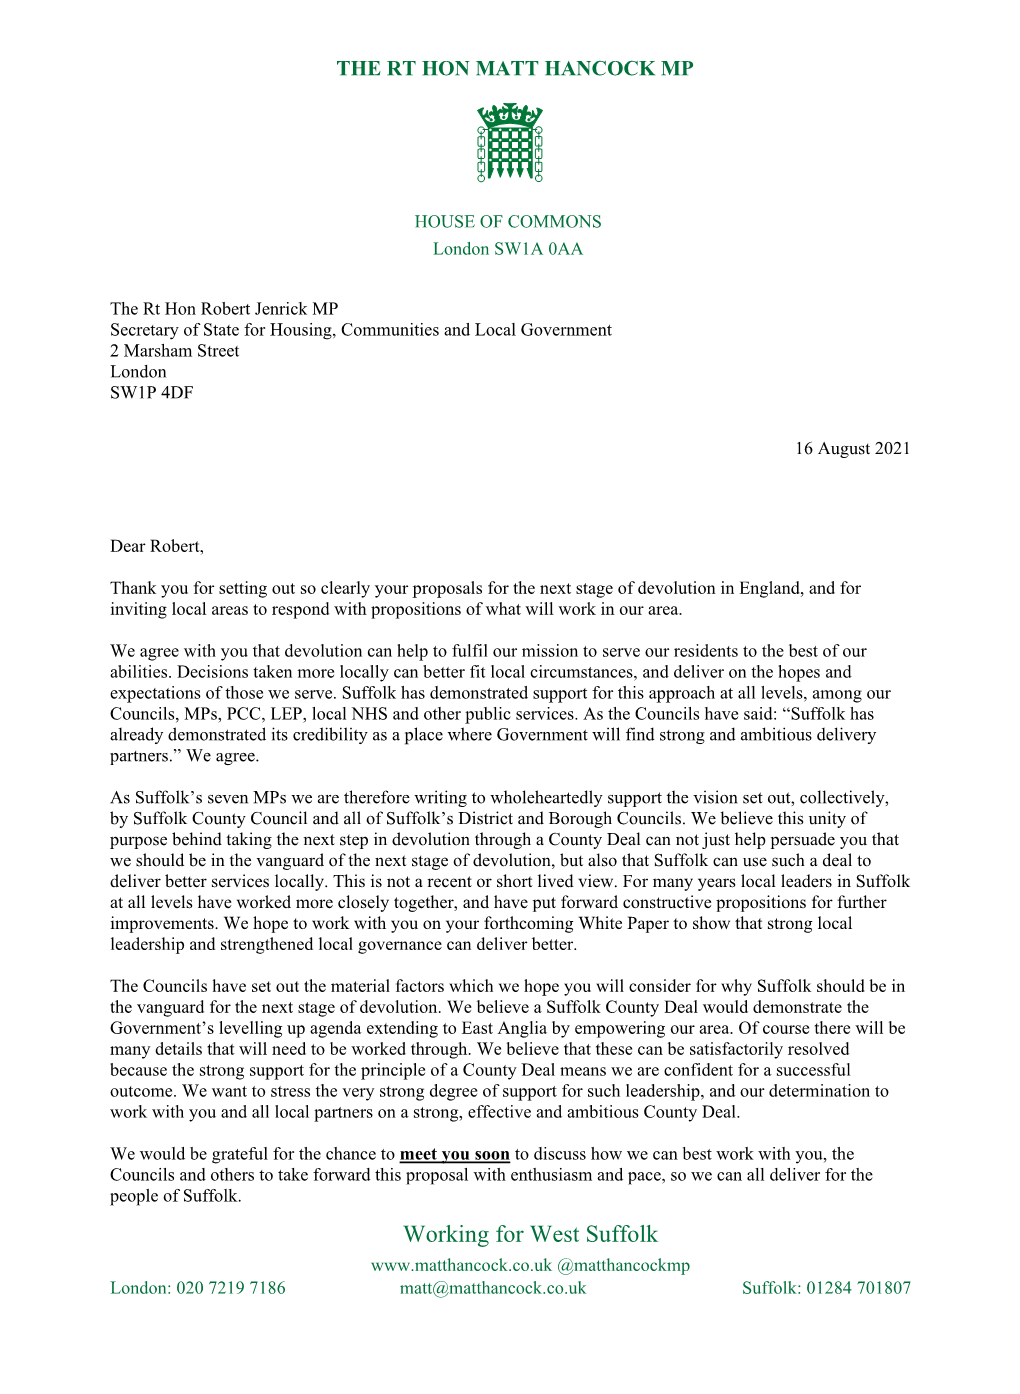 The Letter Sent to Robert Jenrick MP